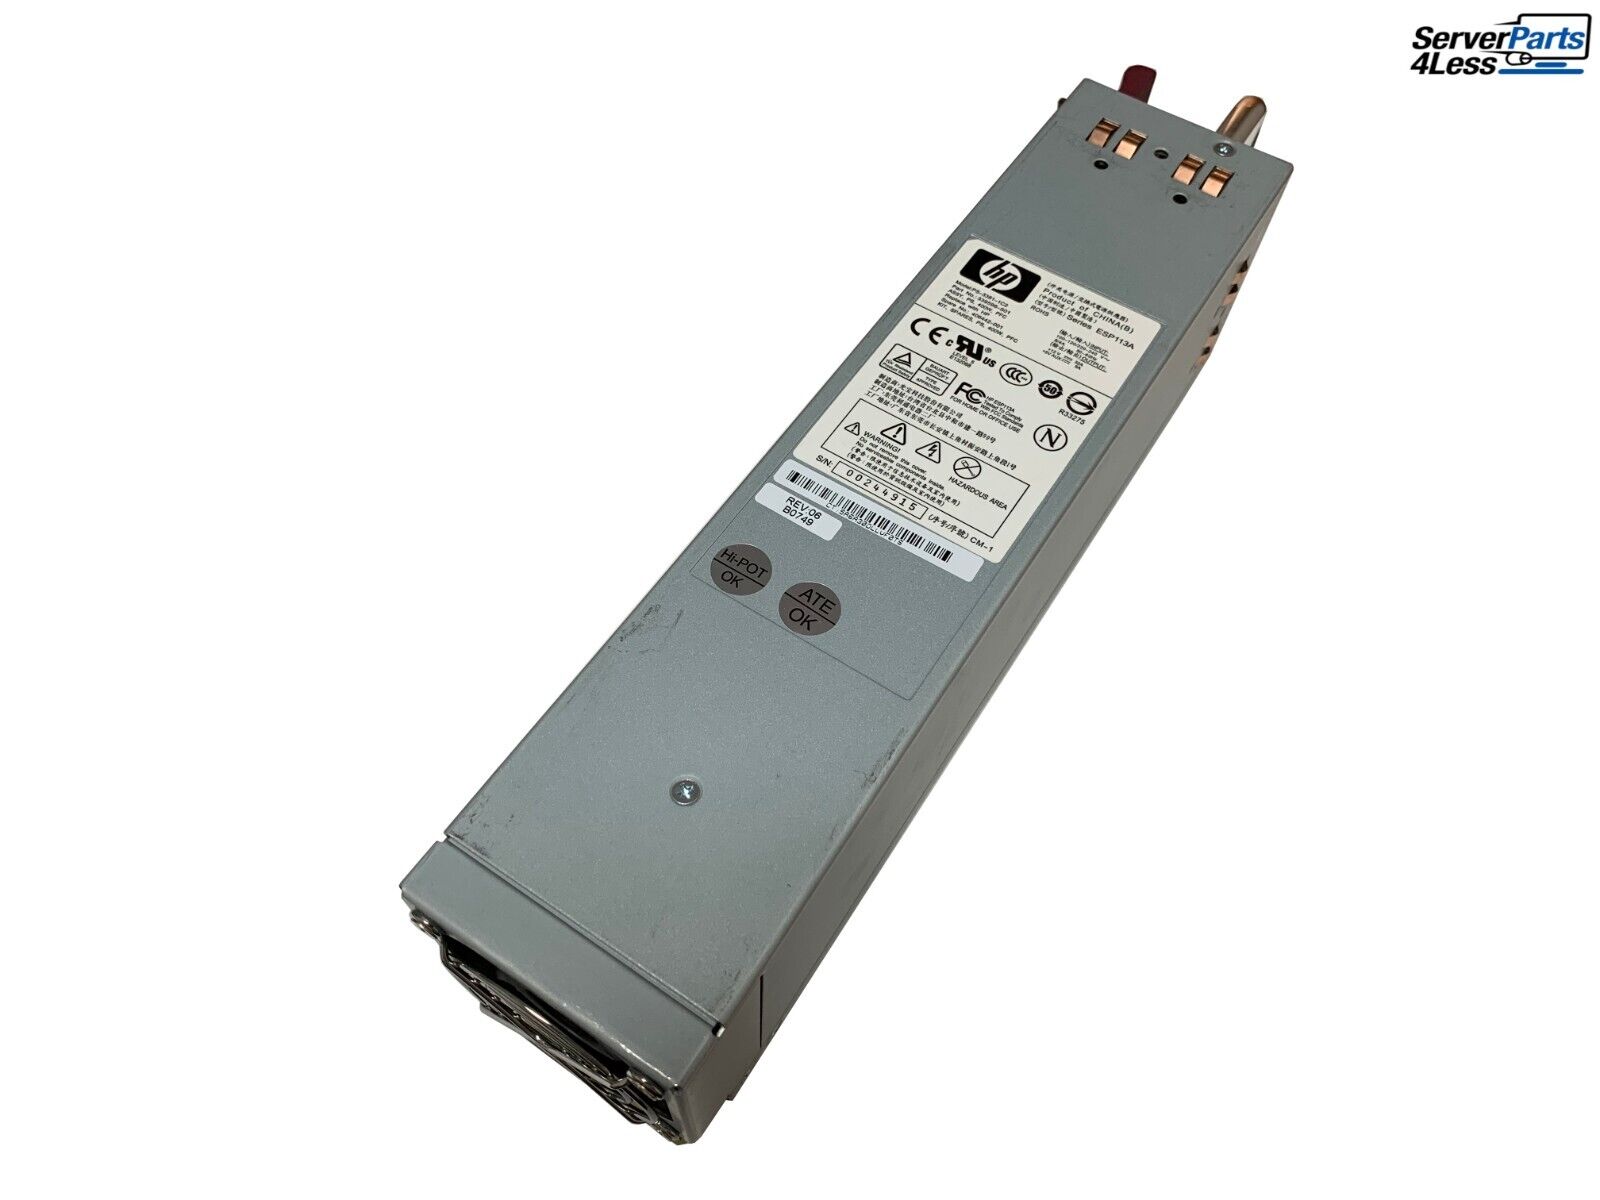 406442-001 Hewlett-Packard HP Power Module - 400 WATT